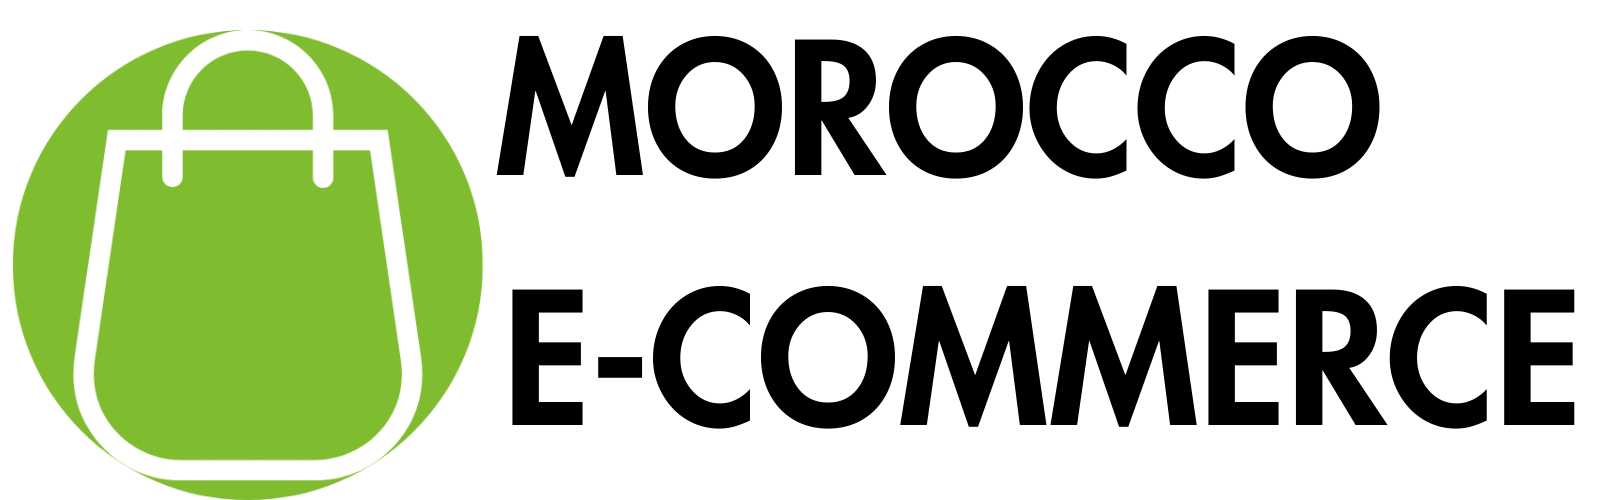 Moroccoecommerce